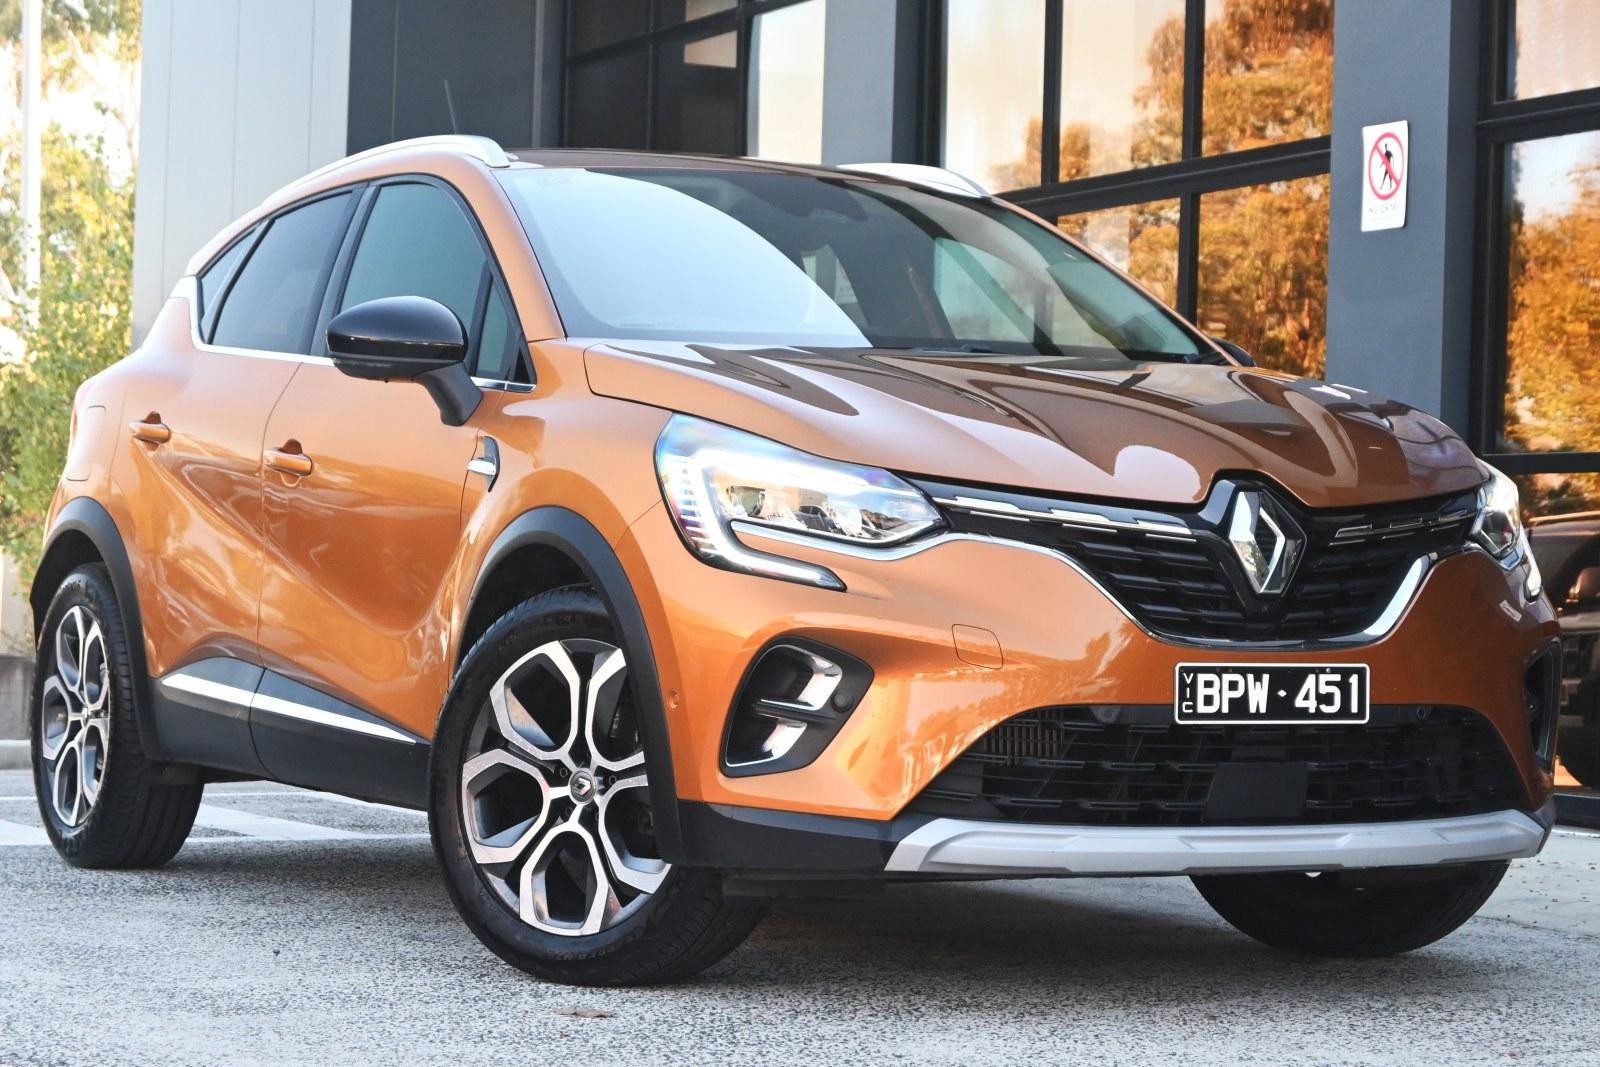 Renault Captur image 1